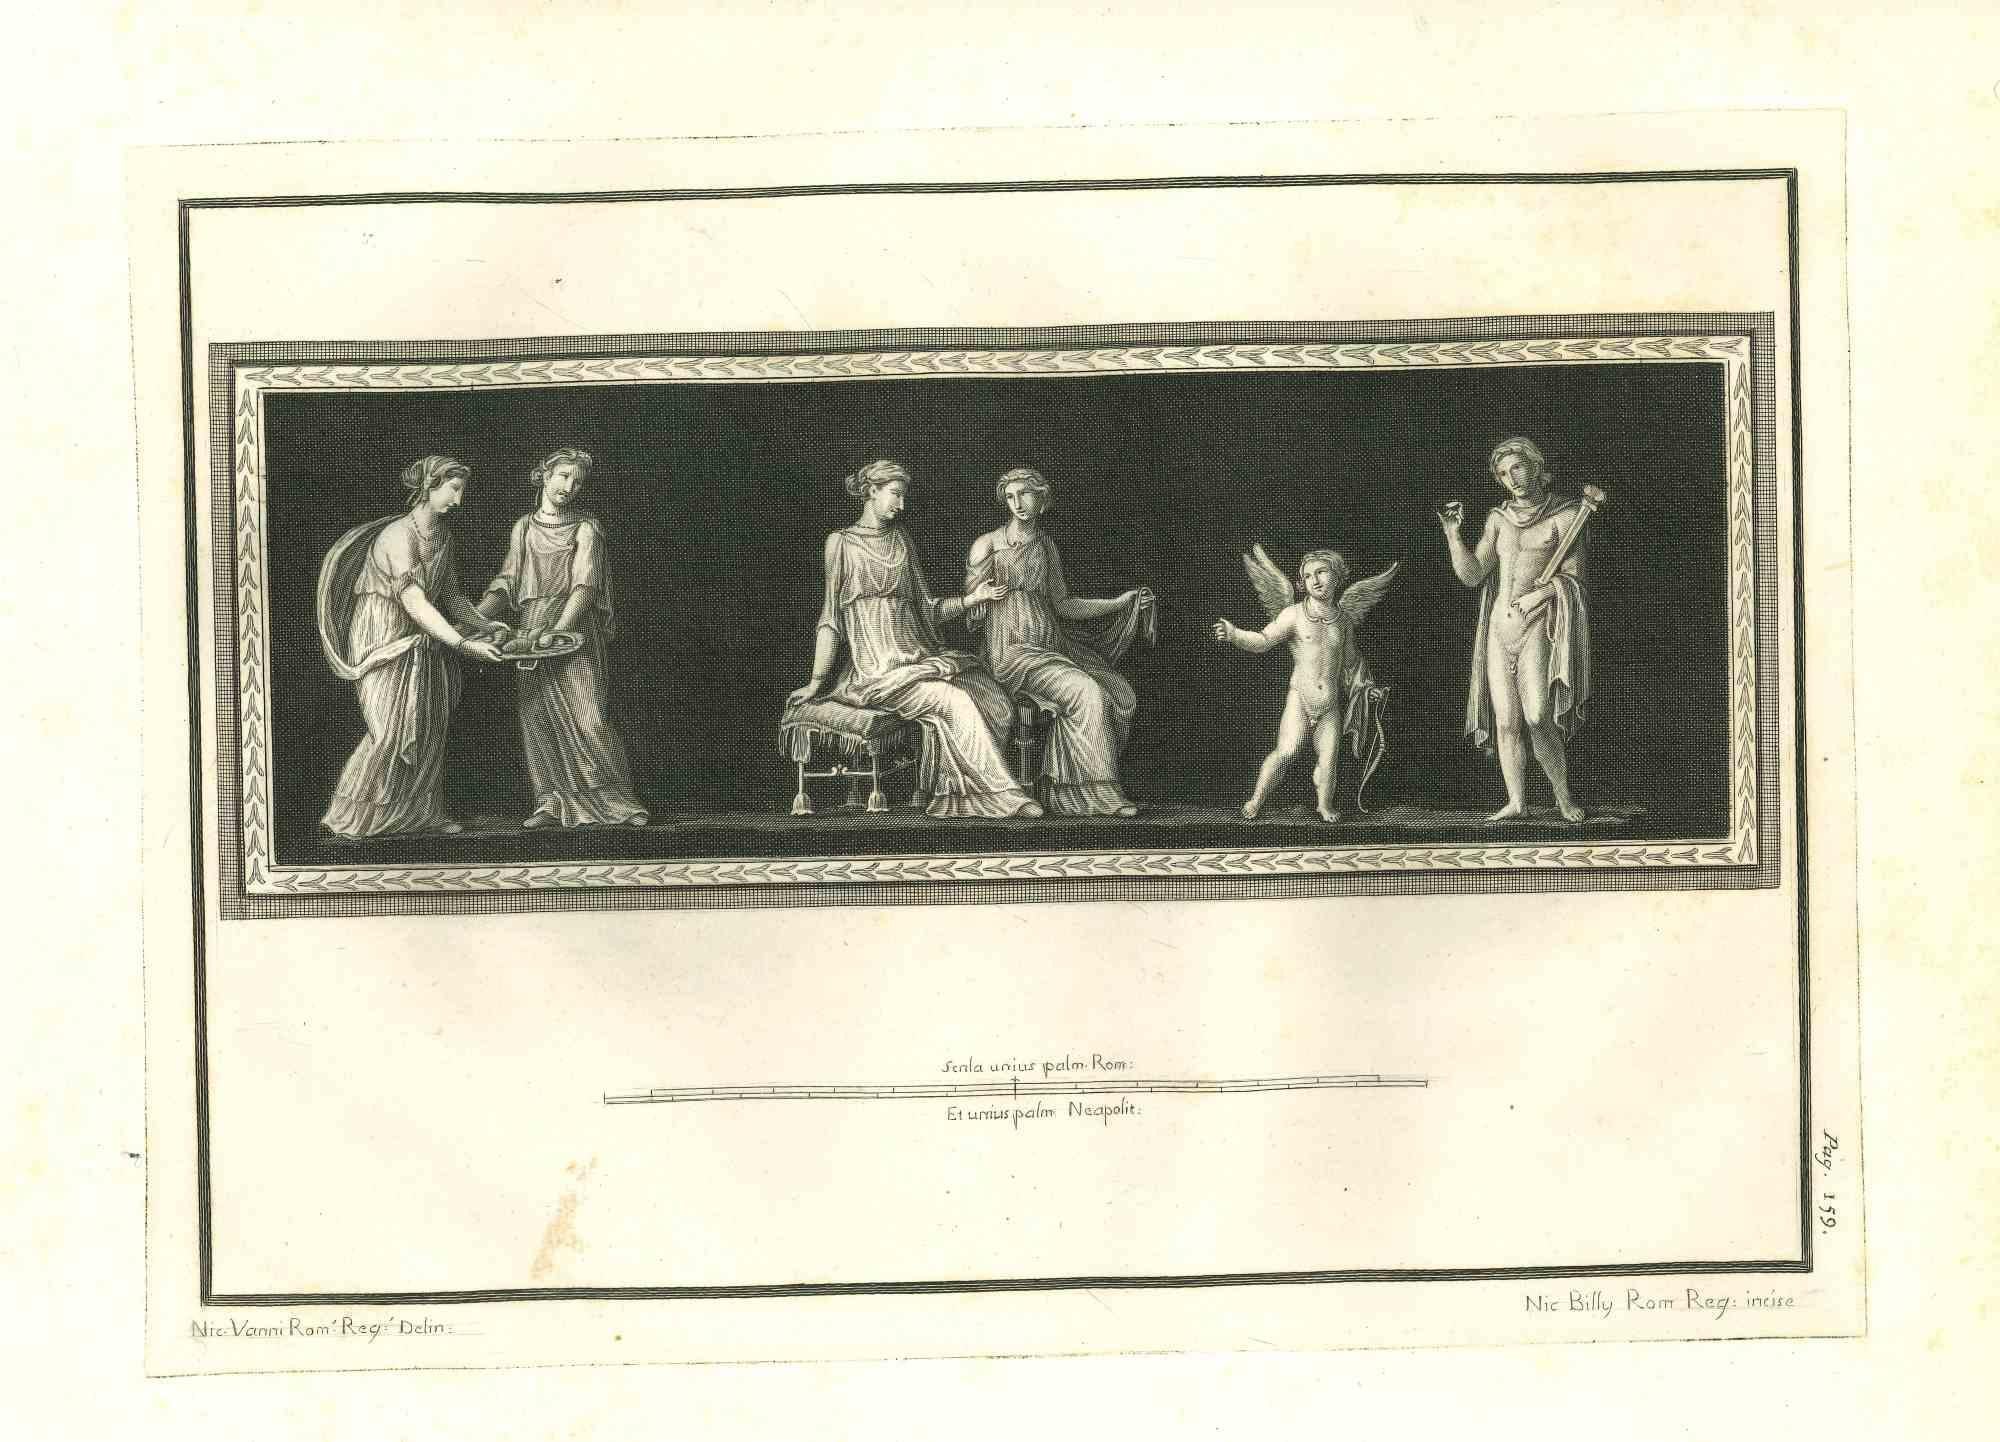 R. Pozzi, N. Vanni Animal Print - Ancient Roman Fresco - Original Etching by VV. AA. - 18th Century